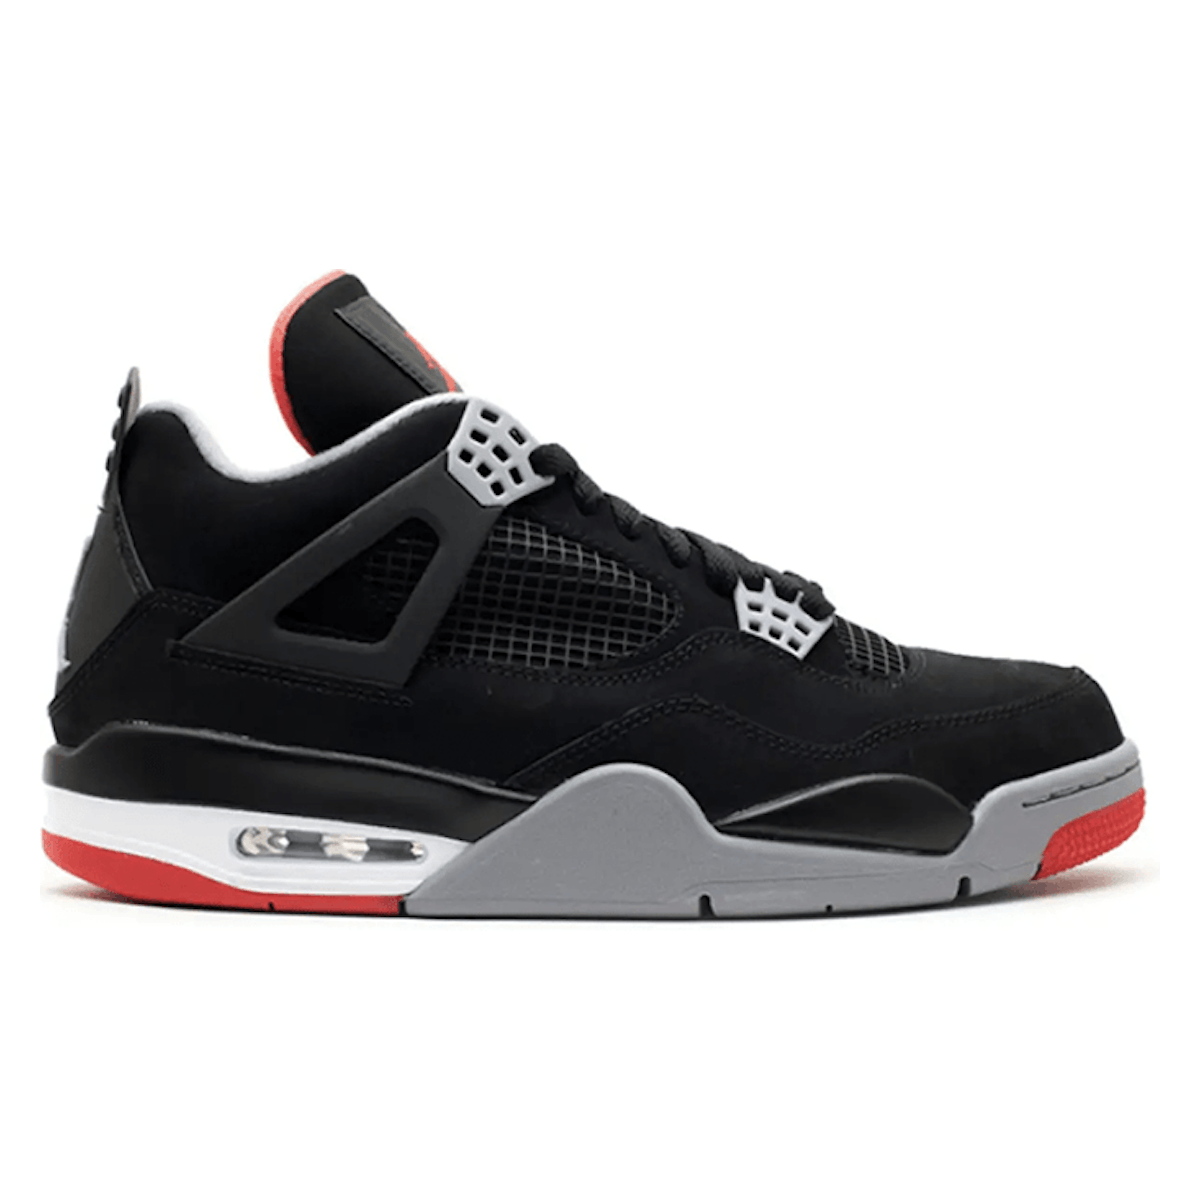 Air Jordan 4 Retro "Bred" 2019